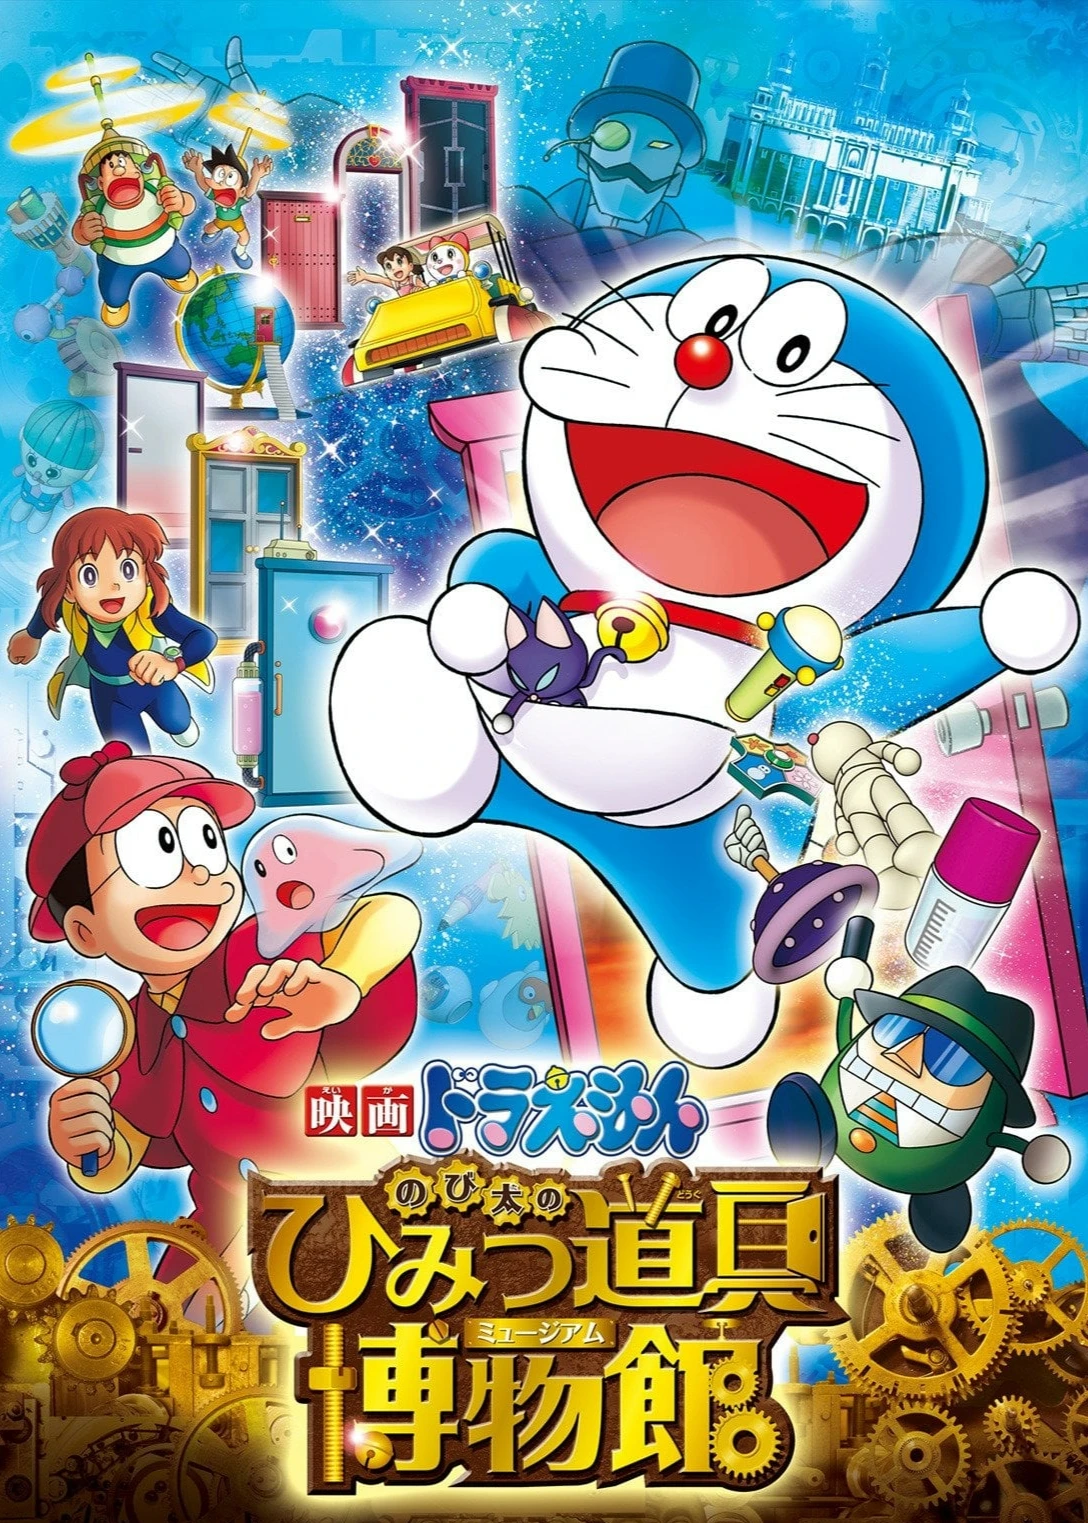 Phim Doraemon: Nobita Và Viện Bảo Tàng Bảo Bối - Doraemon the Movie: Nobita's Secret Gadget Museum (2013)